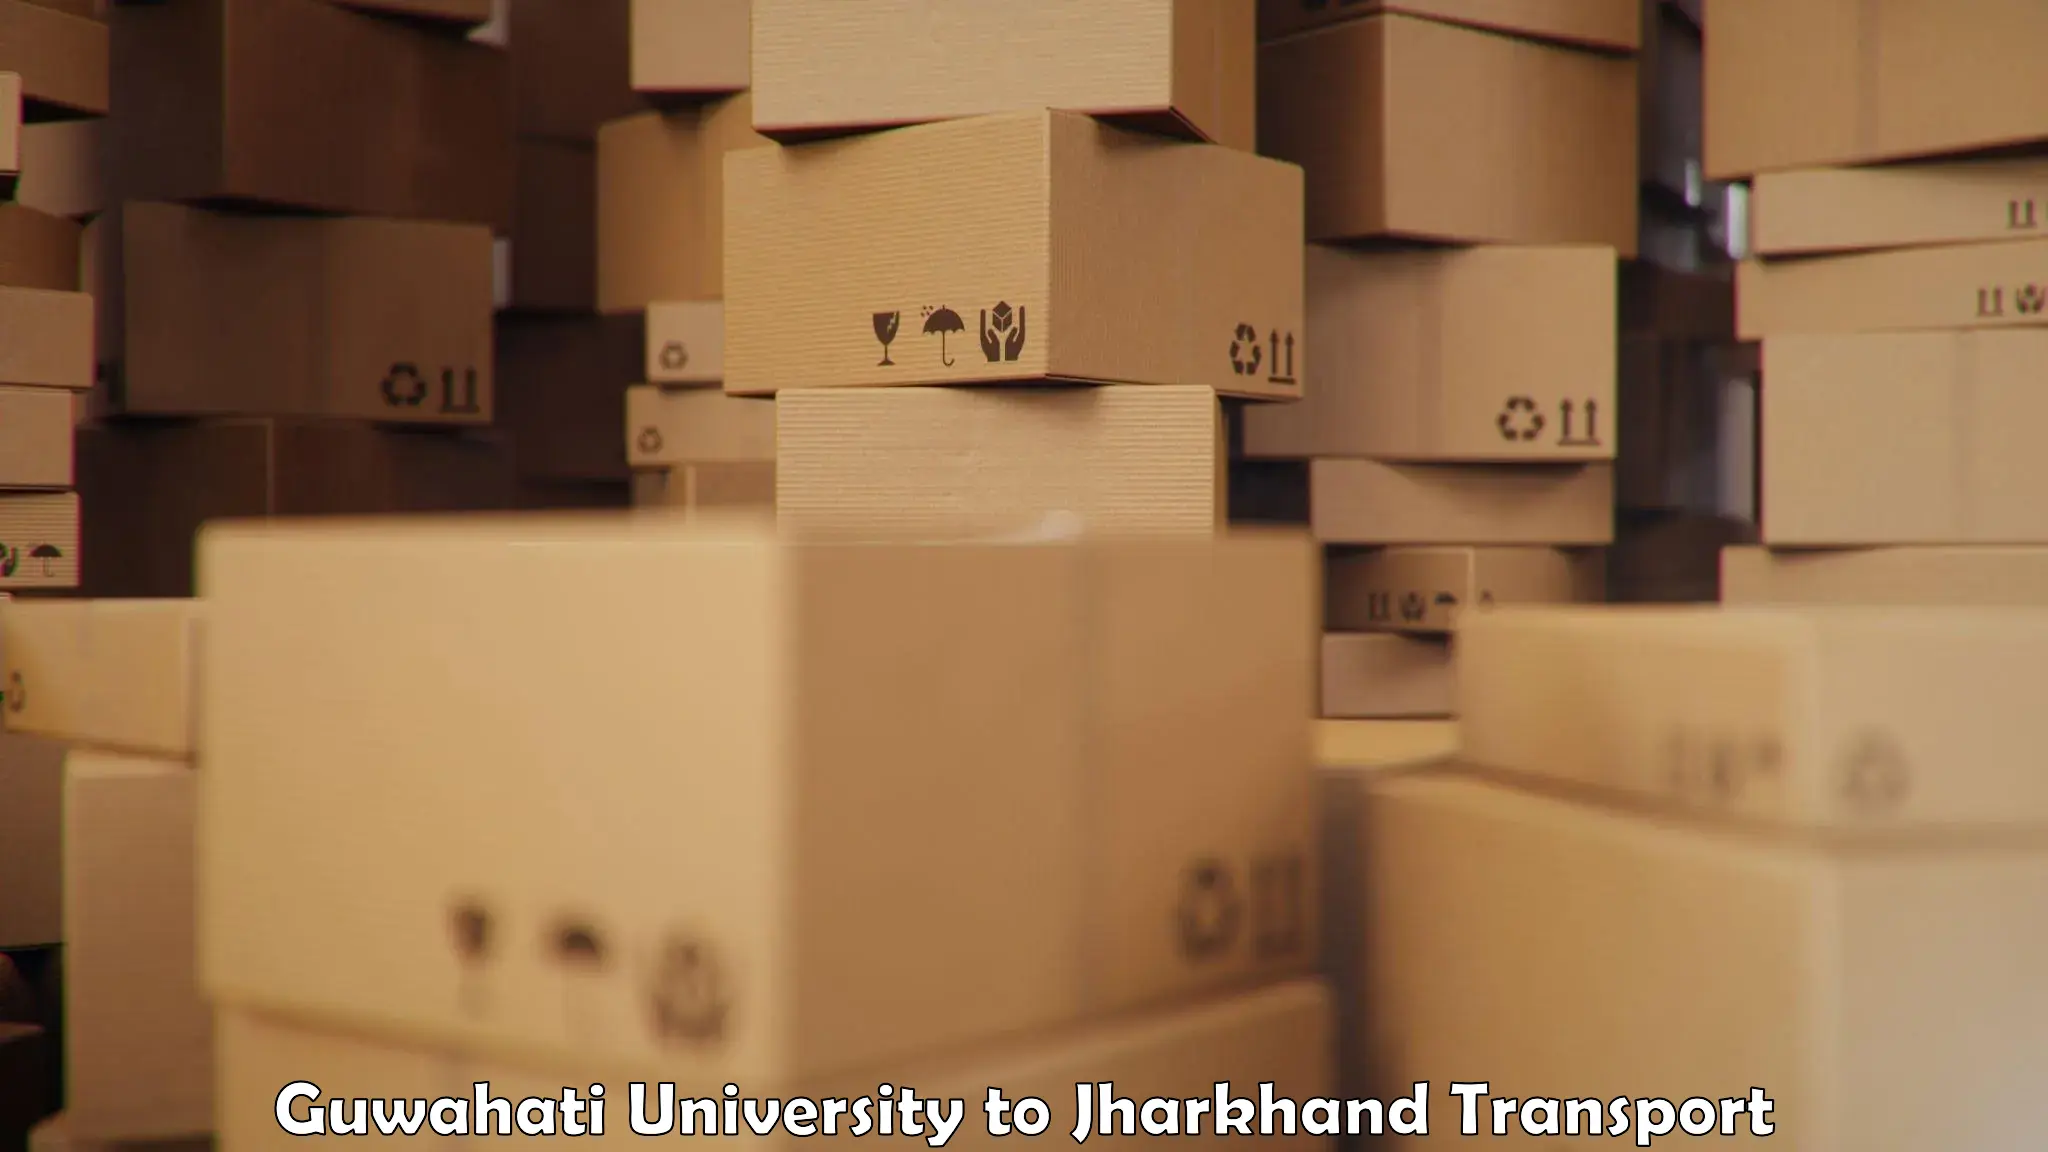 Furniture transport service Guwahati University to Medininagar